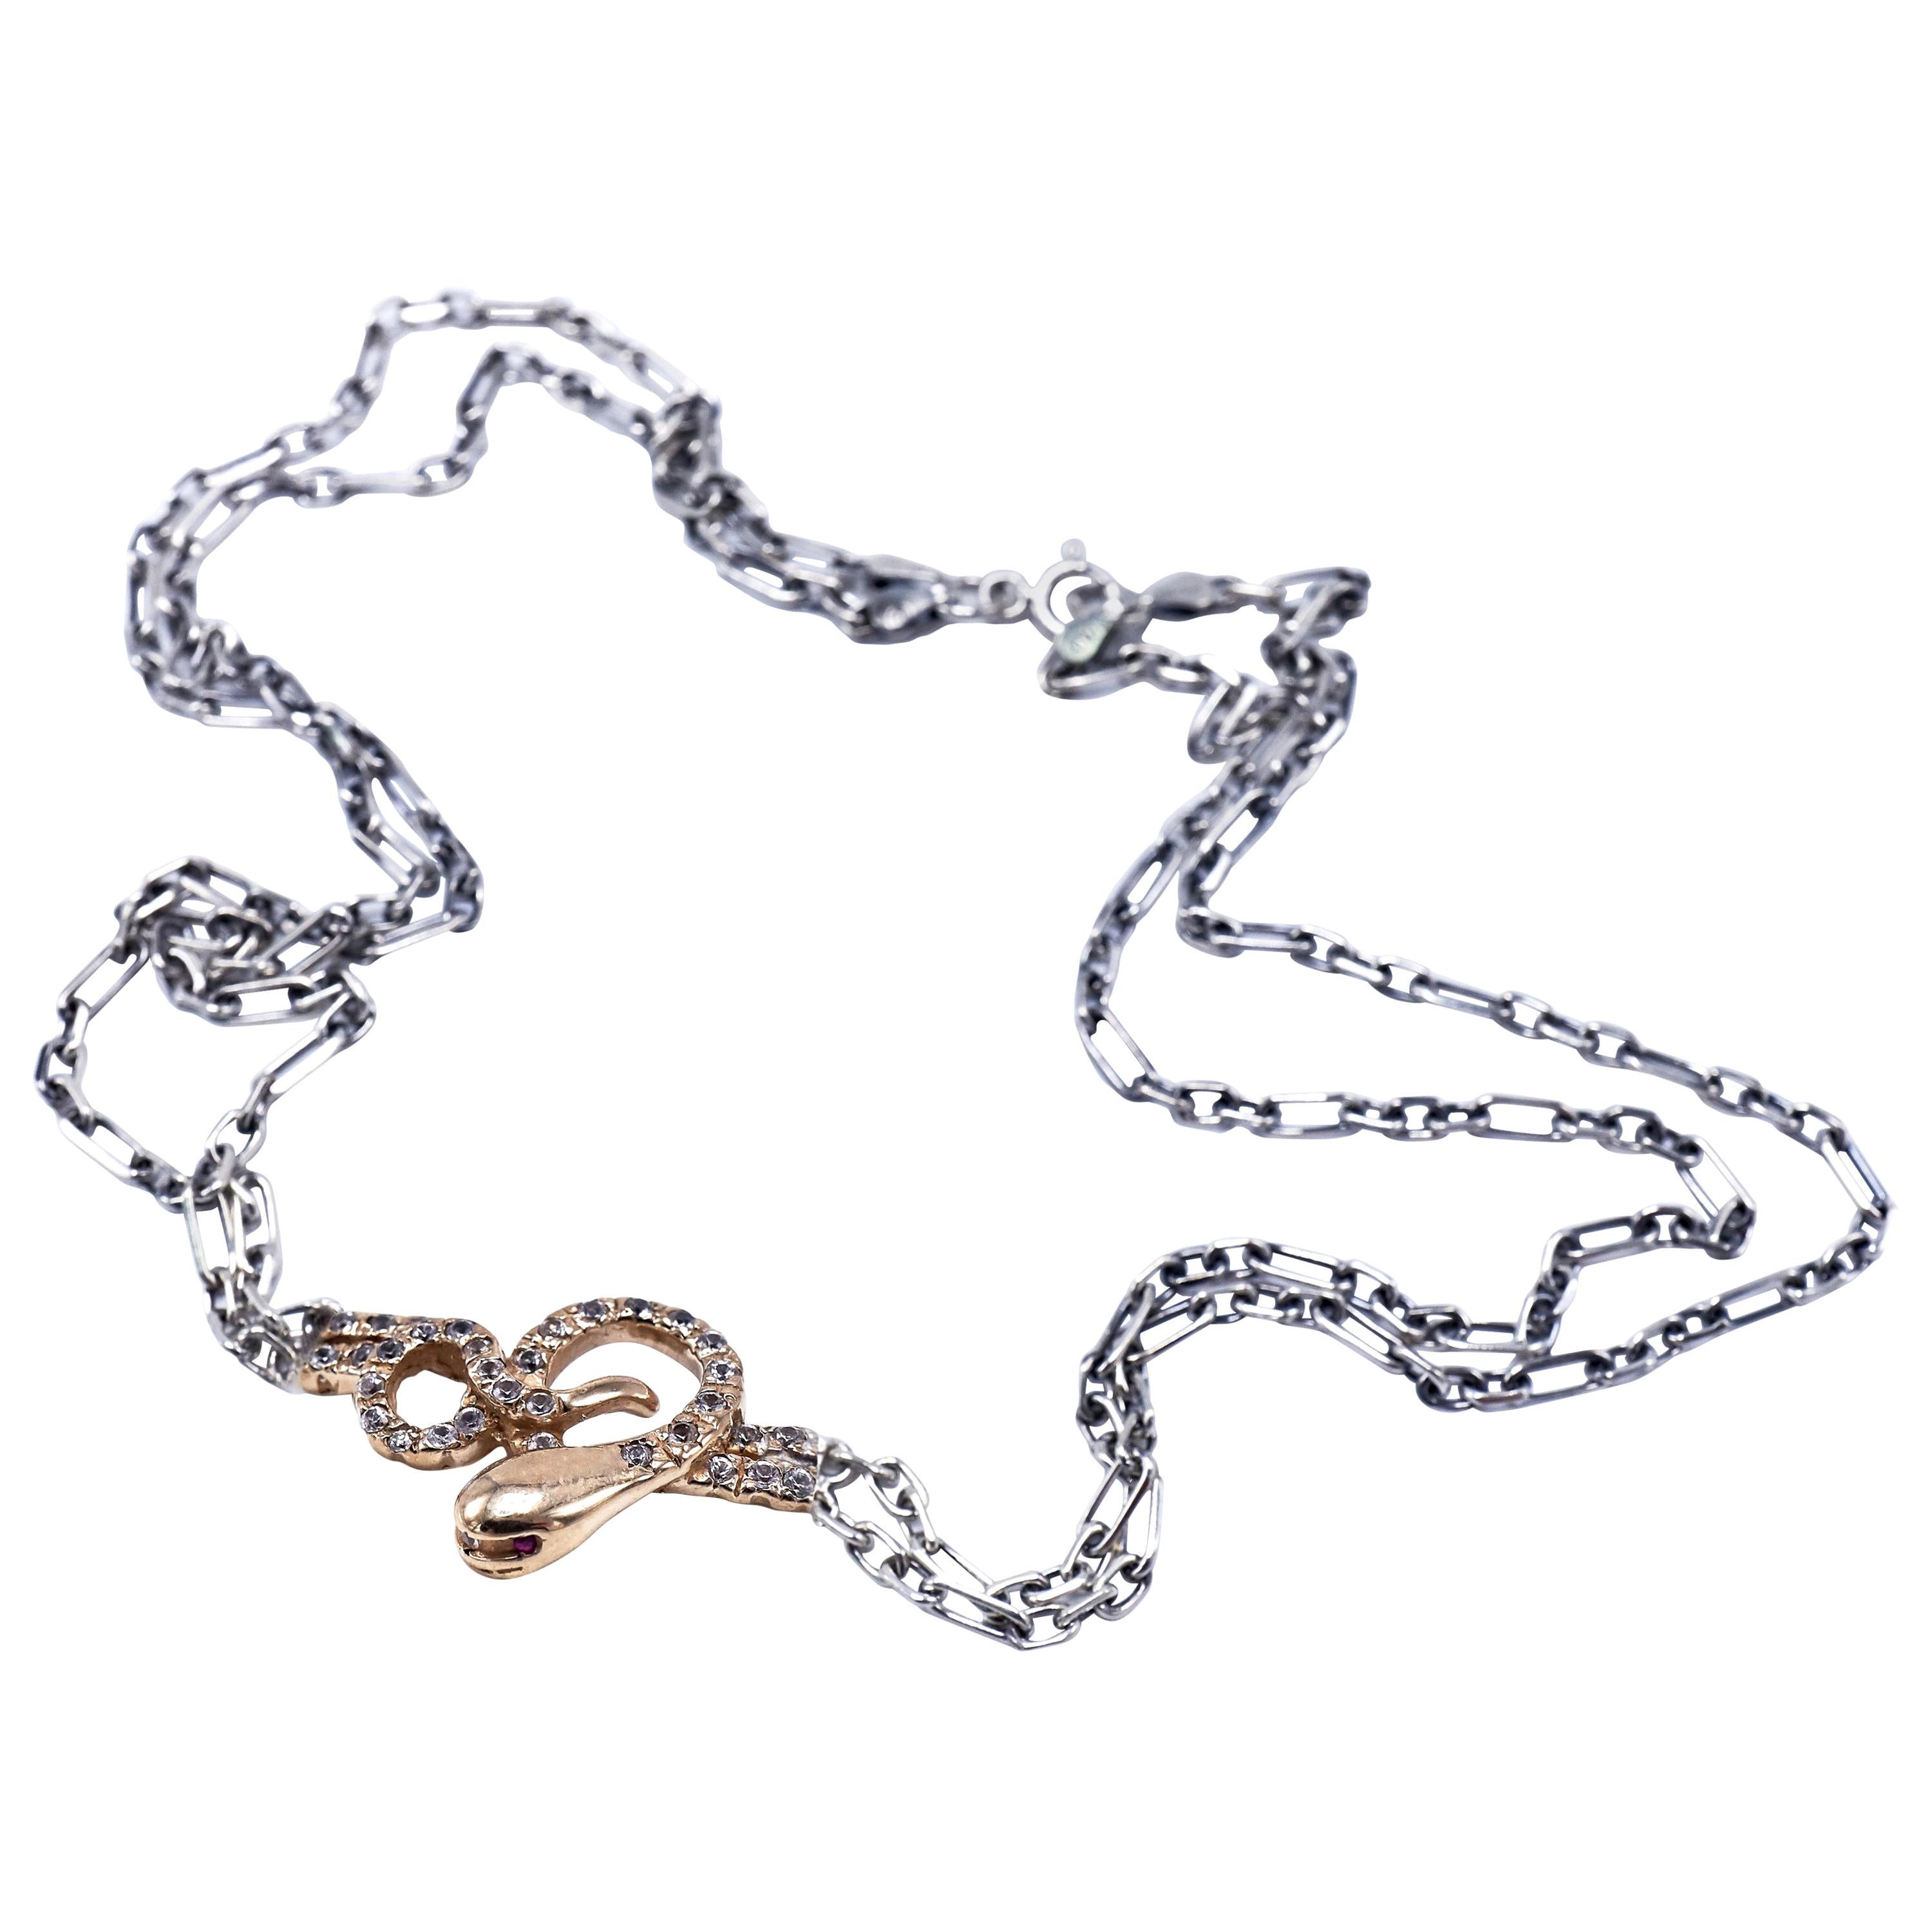 White Diamond Ruby Gold Snake Pendant Choker Chunky Chain Necklace Sterling Silver J Dauphin

J DAUPHIN 